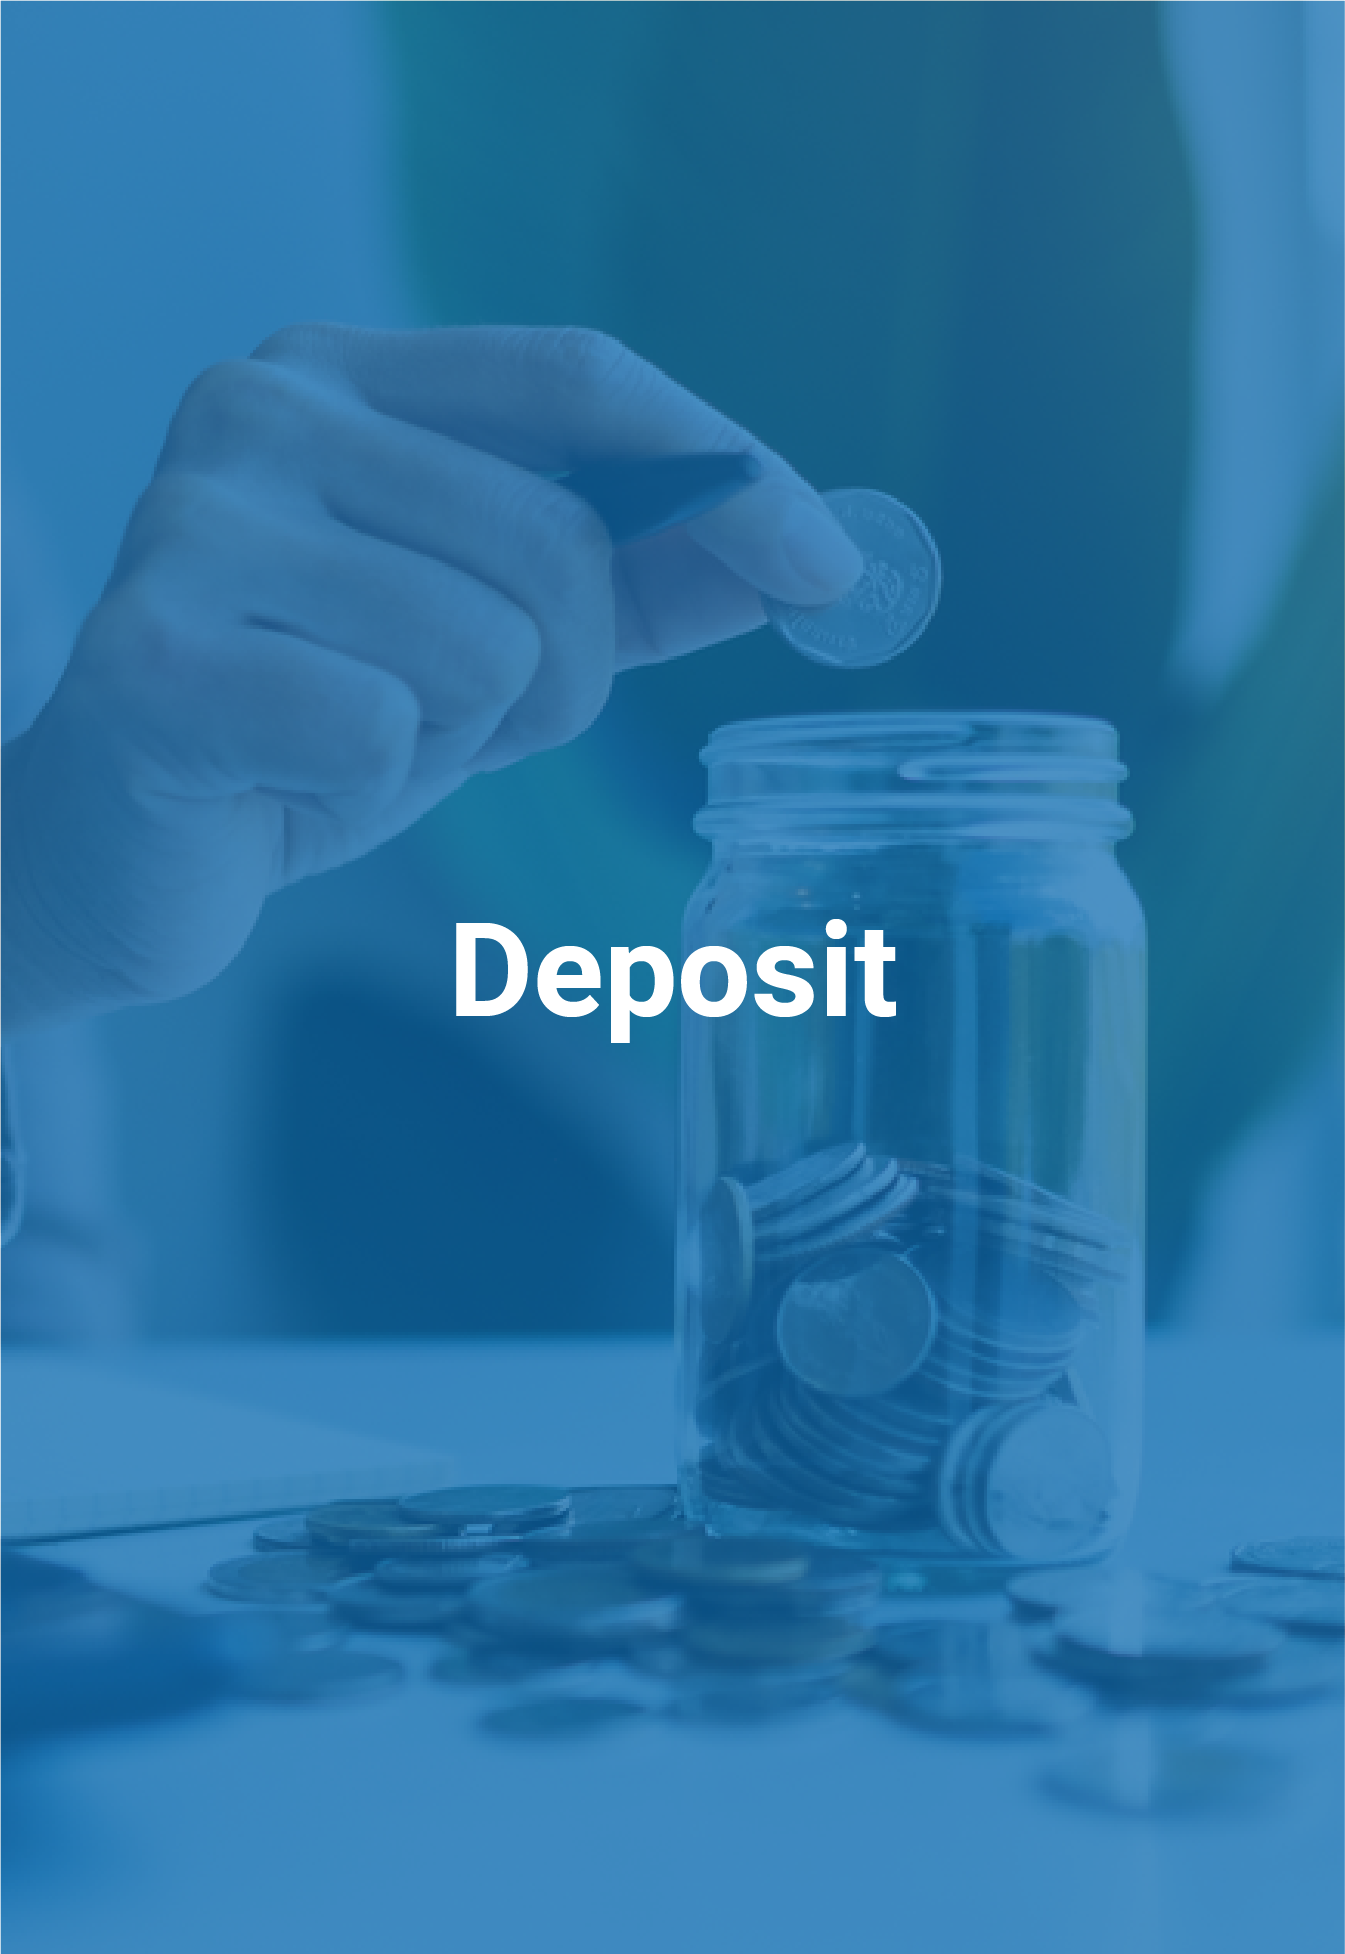 Deposit-02